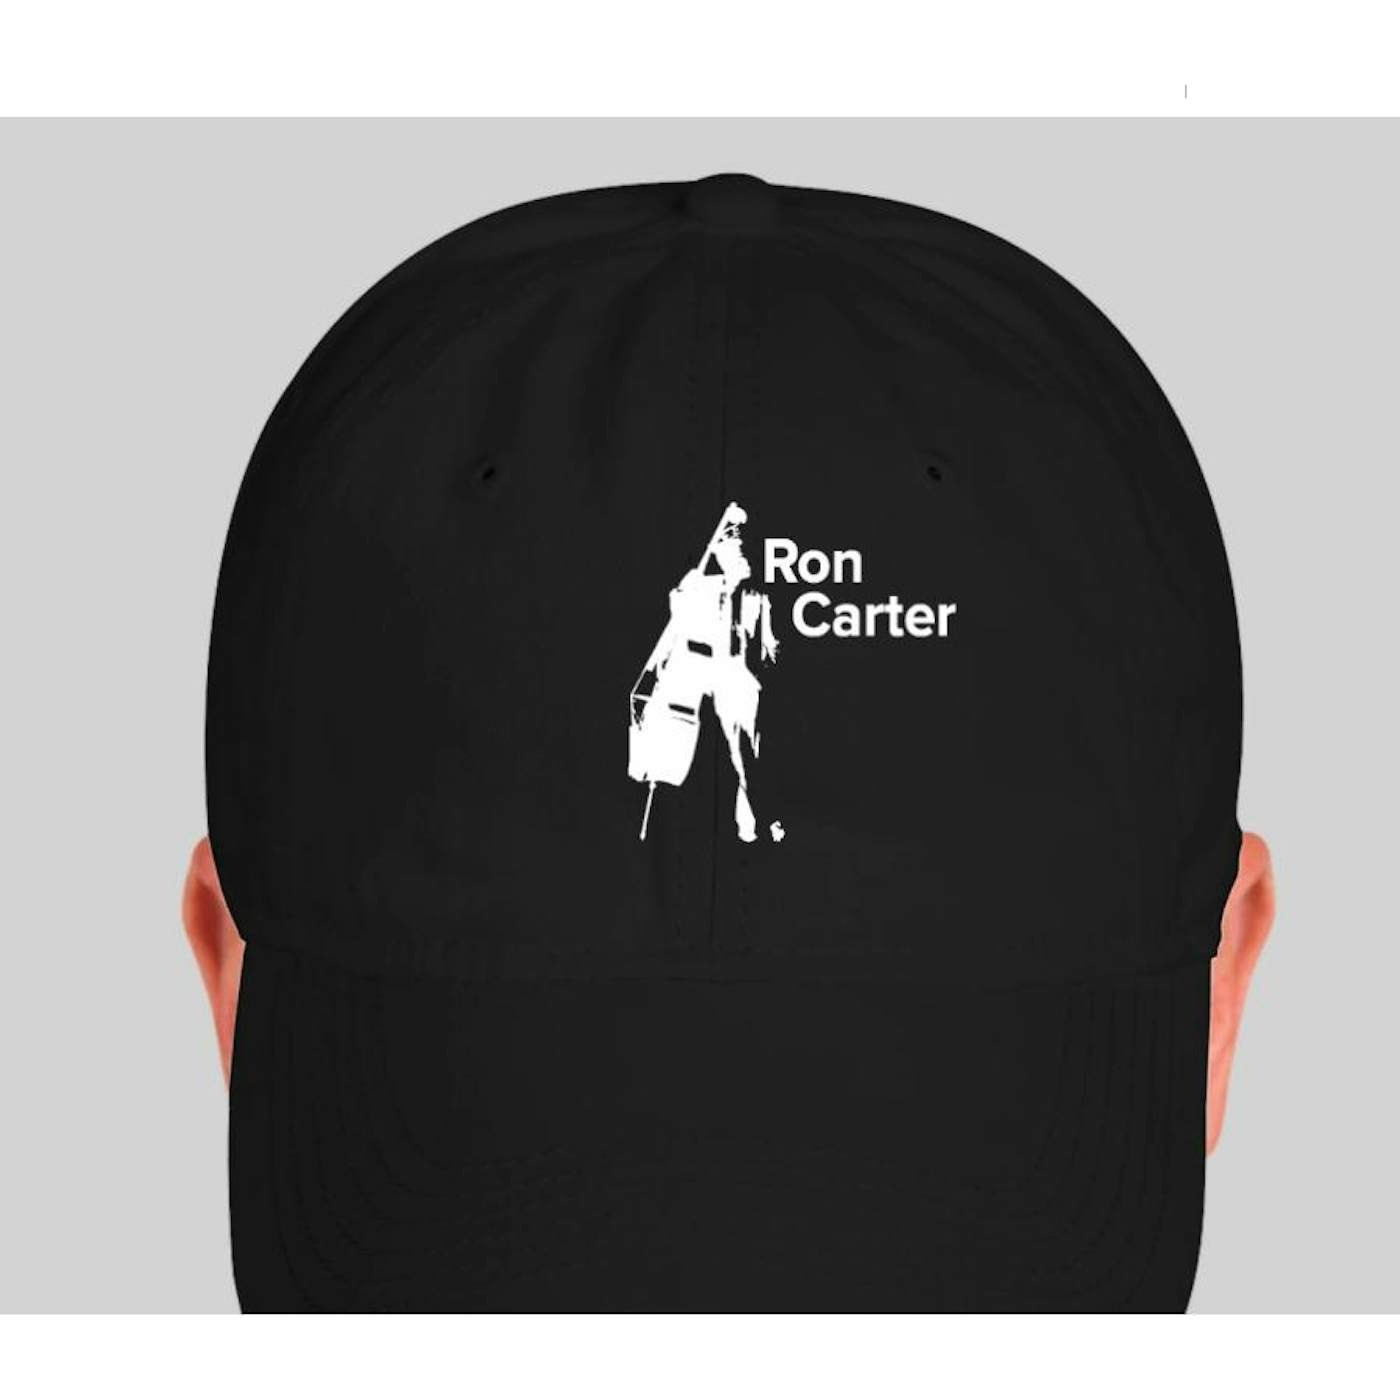 Ron Carter Baseball Cap